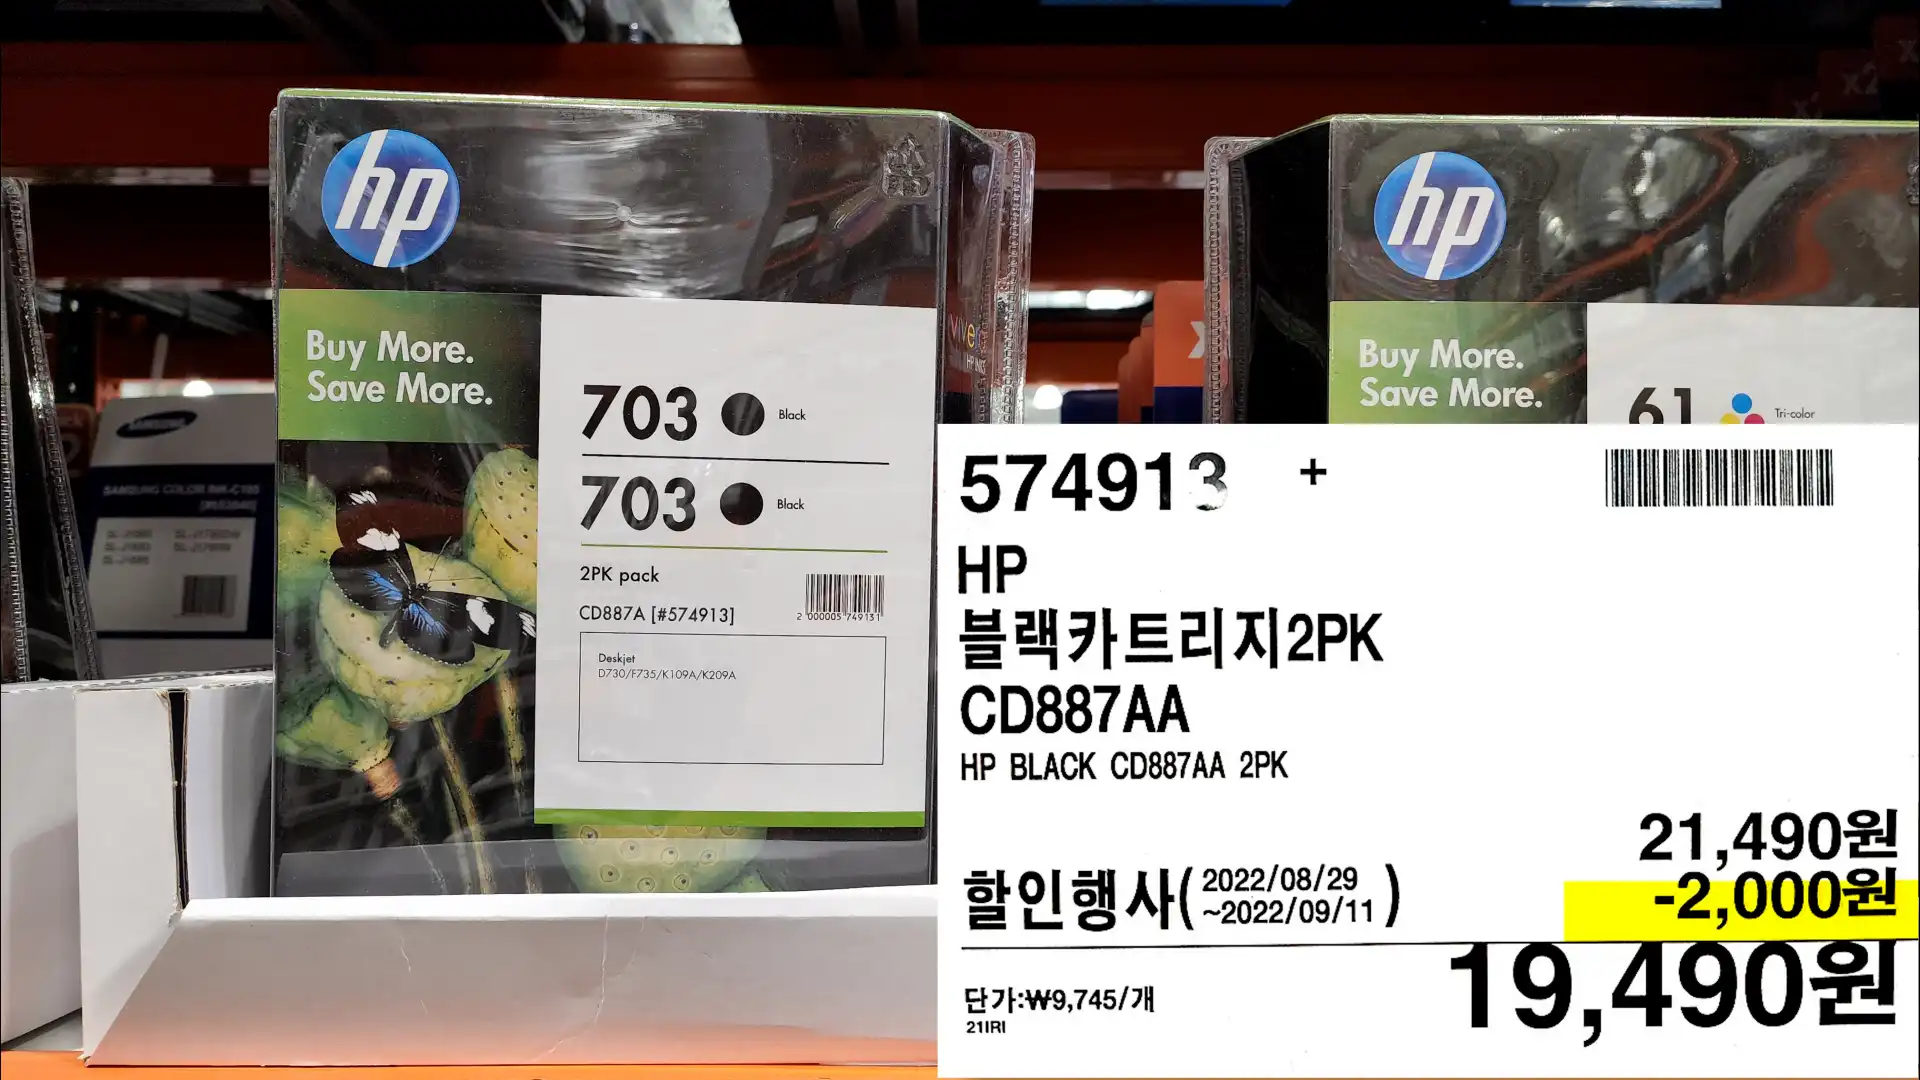 HP
블랙카트리지2PK
CD887AA
HP BLACK CD887AA 2PK
19,490원